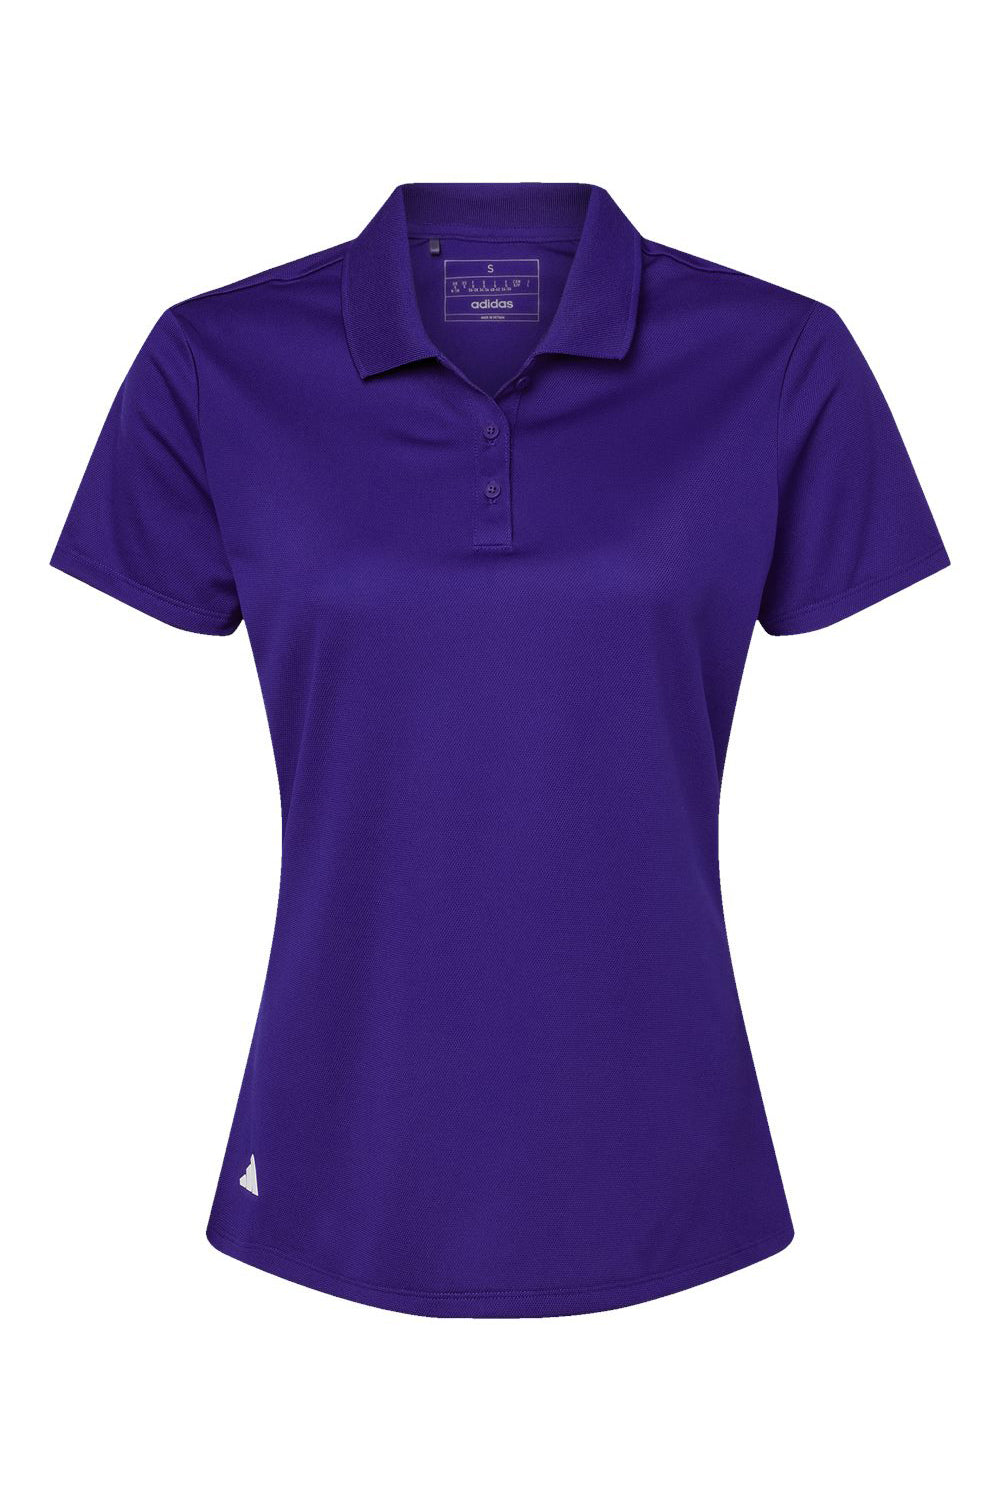 Adidas A431 Womens Basic Short Sleeve Polo Shirt Collegiate Purple Flat Front